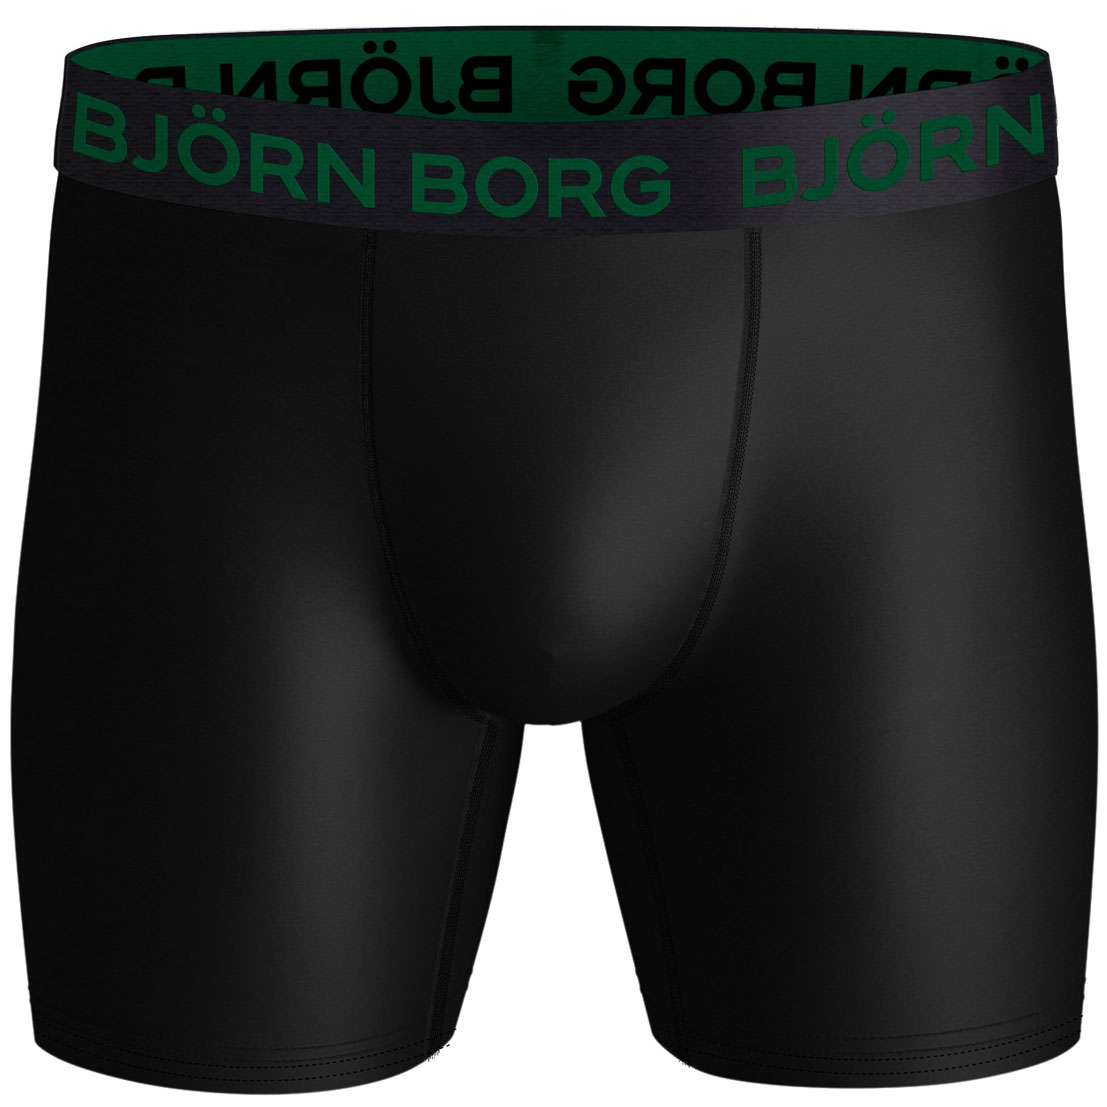 10001729-mp001-Bjorn-Borg-groen